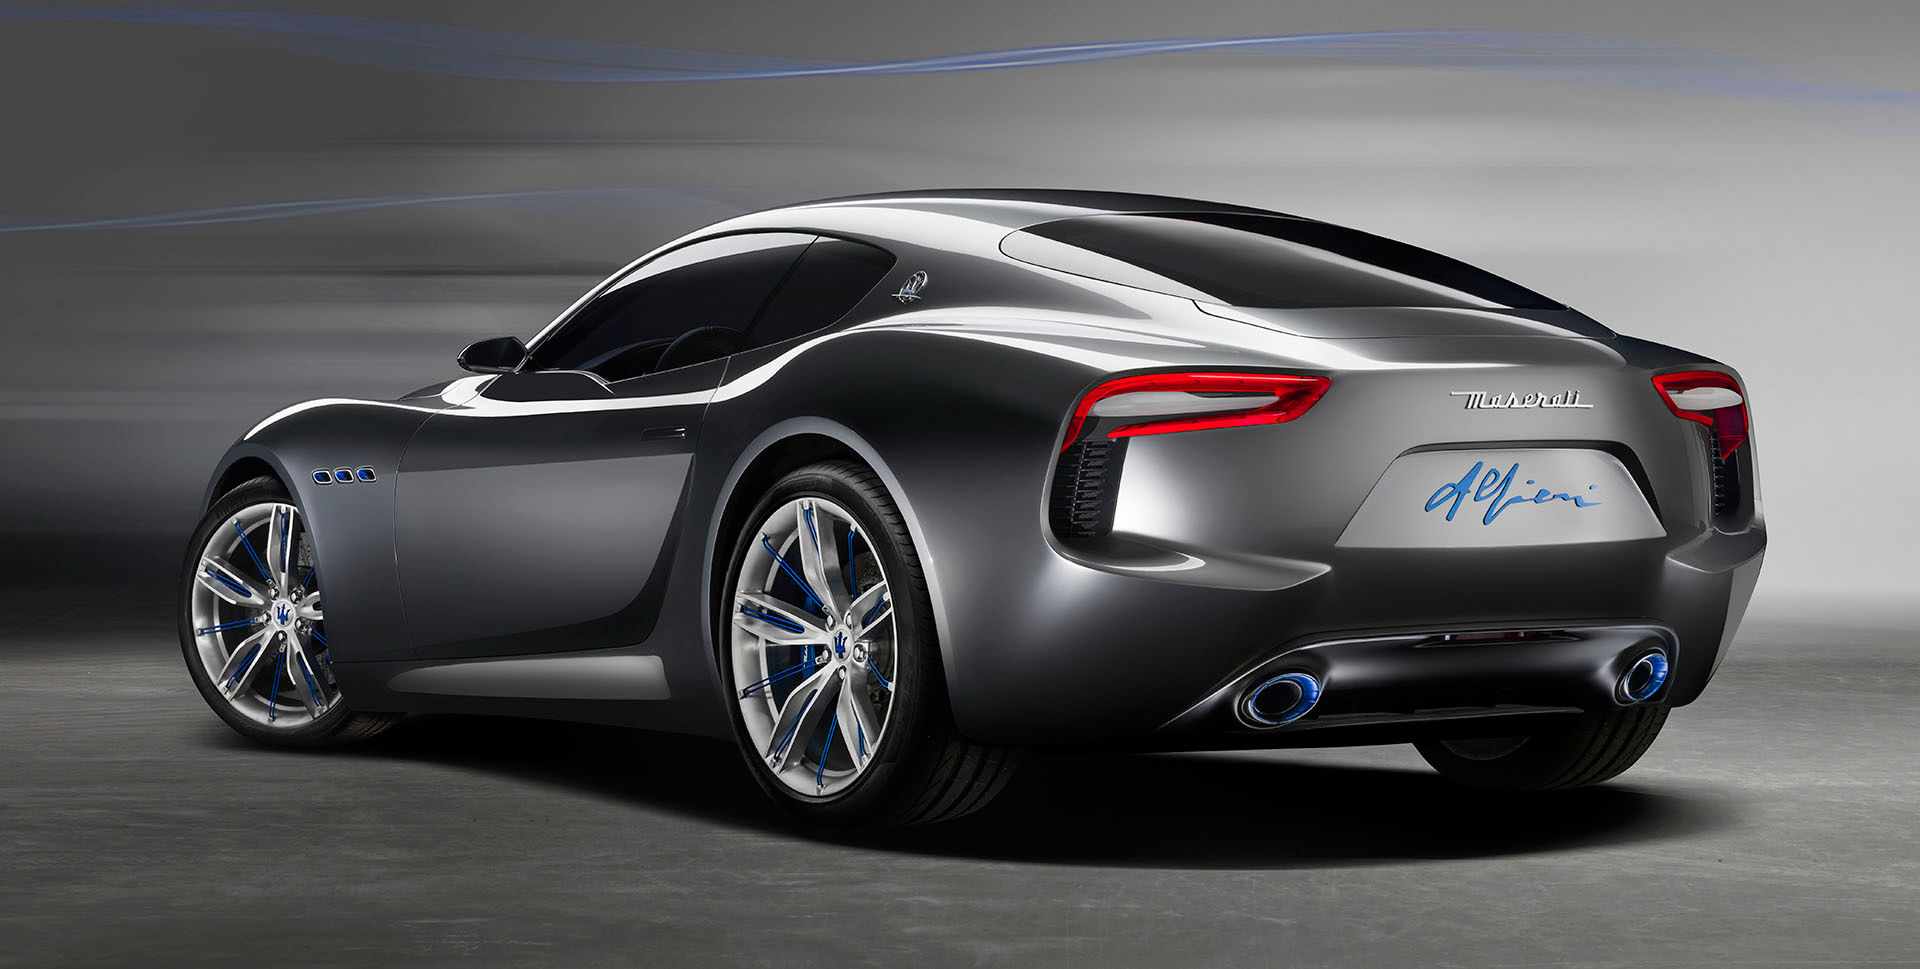 Maserati Alfieri Concept Car - Maserati's Geschichte